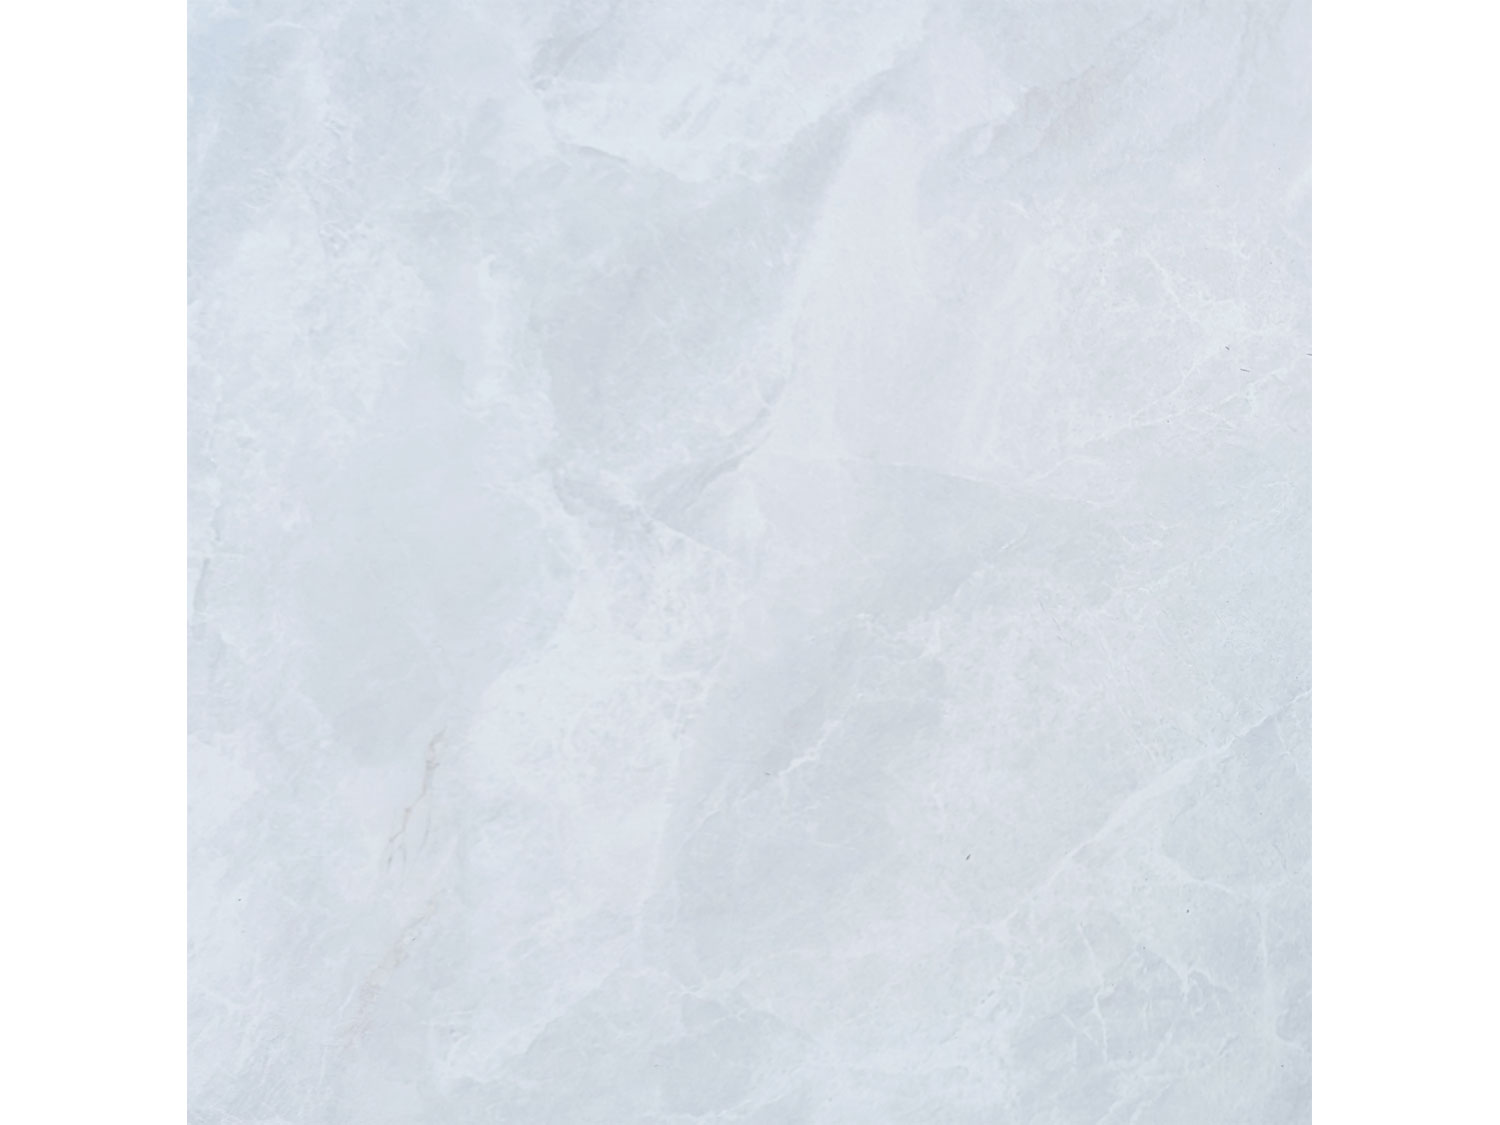 Moonlight Ceramic Floor Tile - 393 x 393mm